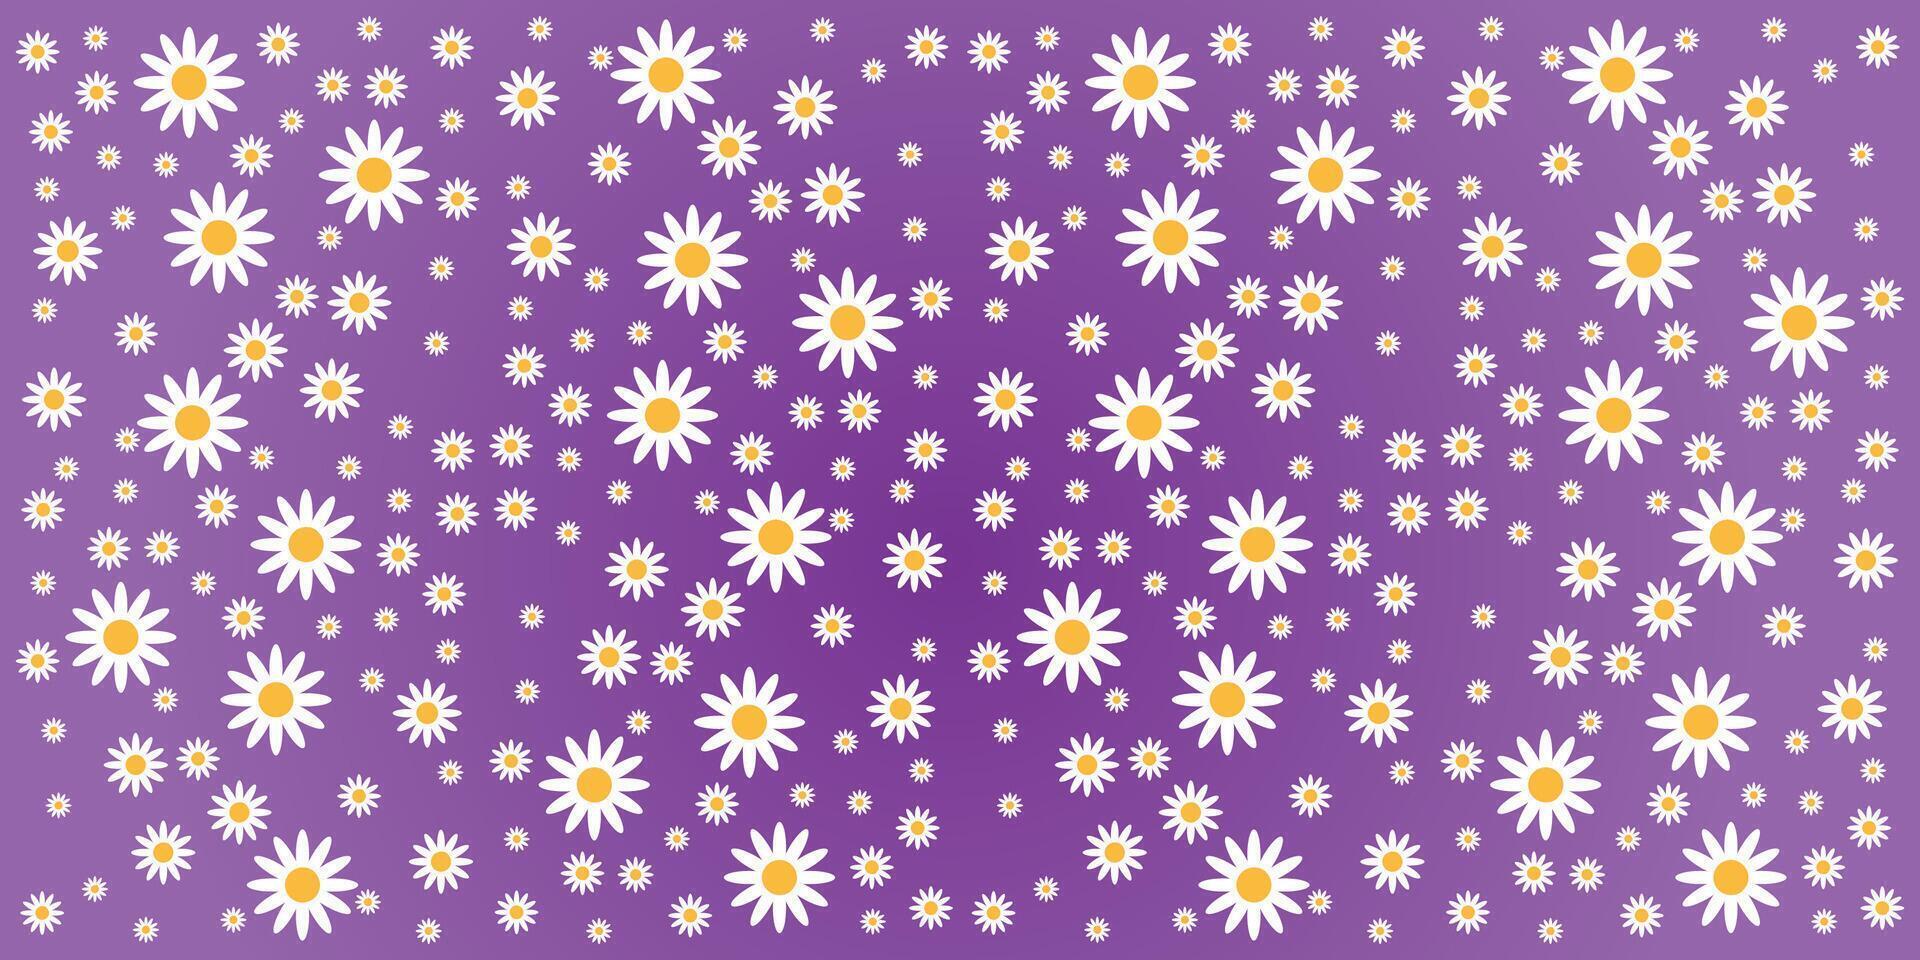 daisy pattern fabric pattern design on purple background seamless endless vector